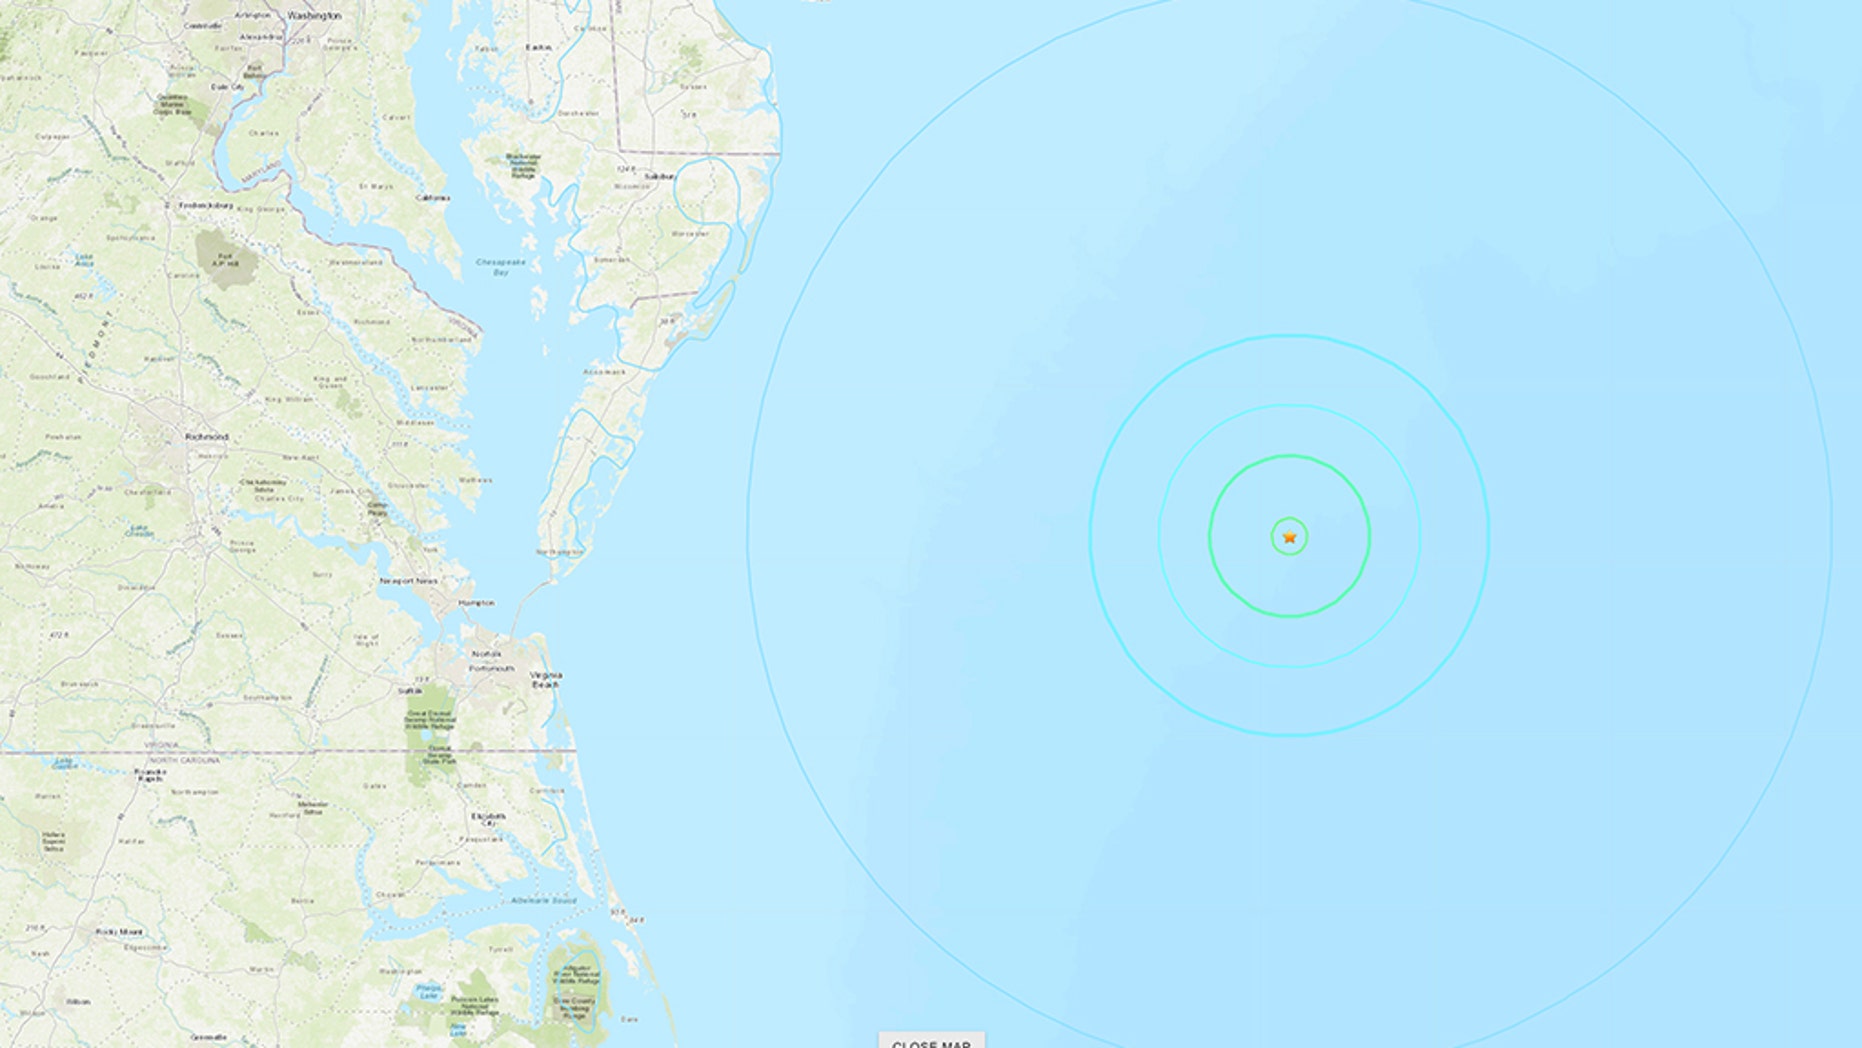 Maryland coast rattled by 4.7-magnitude earthquake: USGS